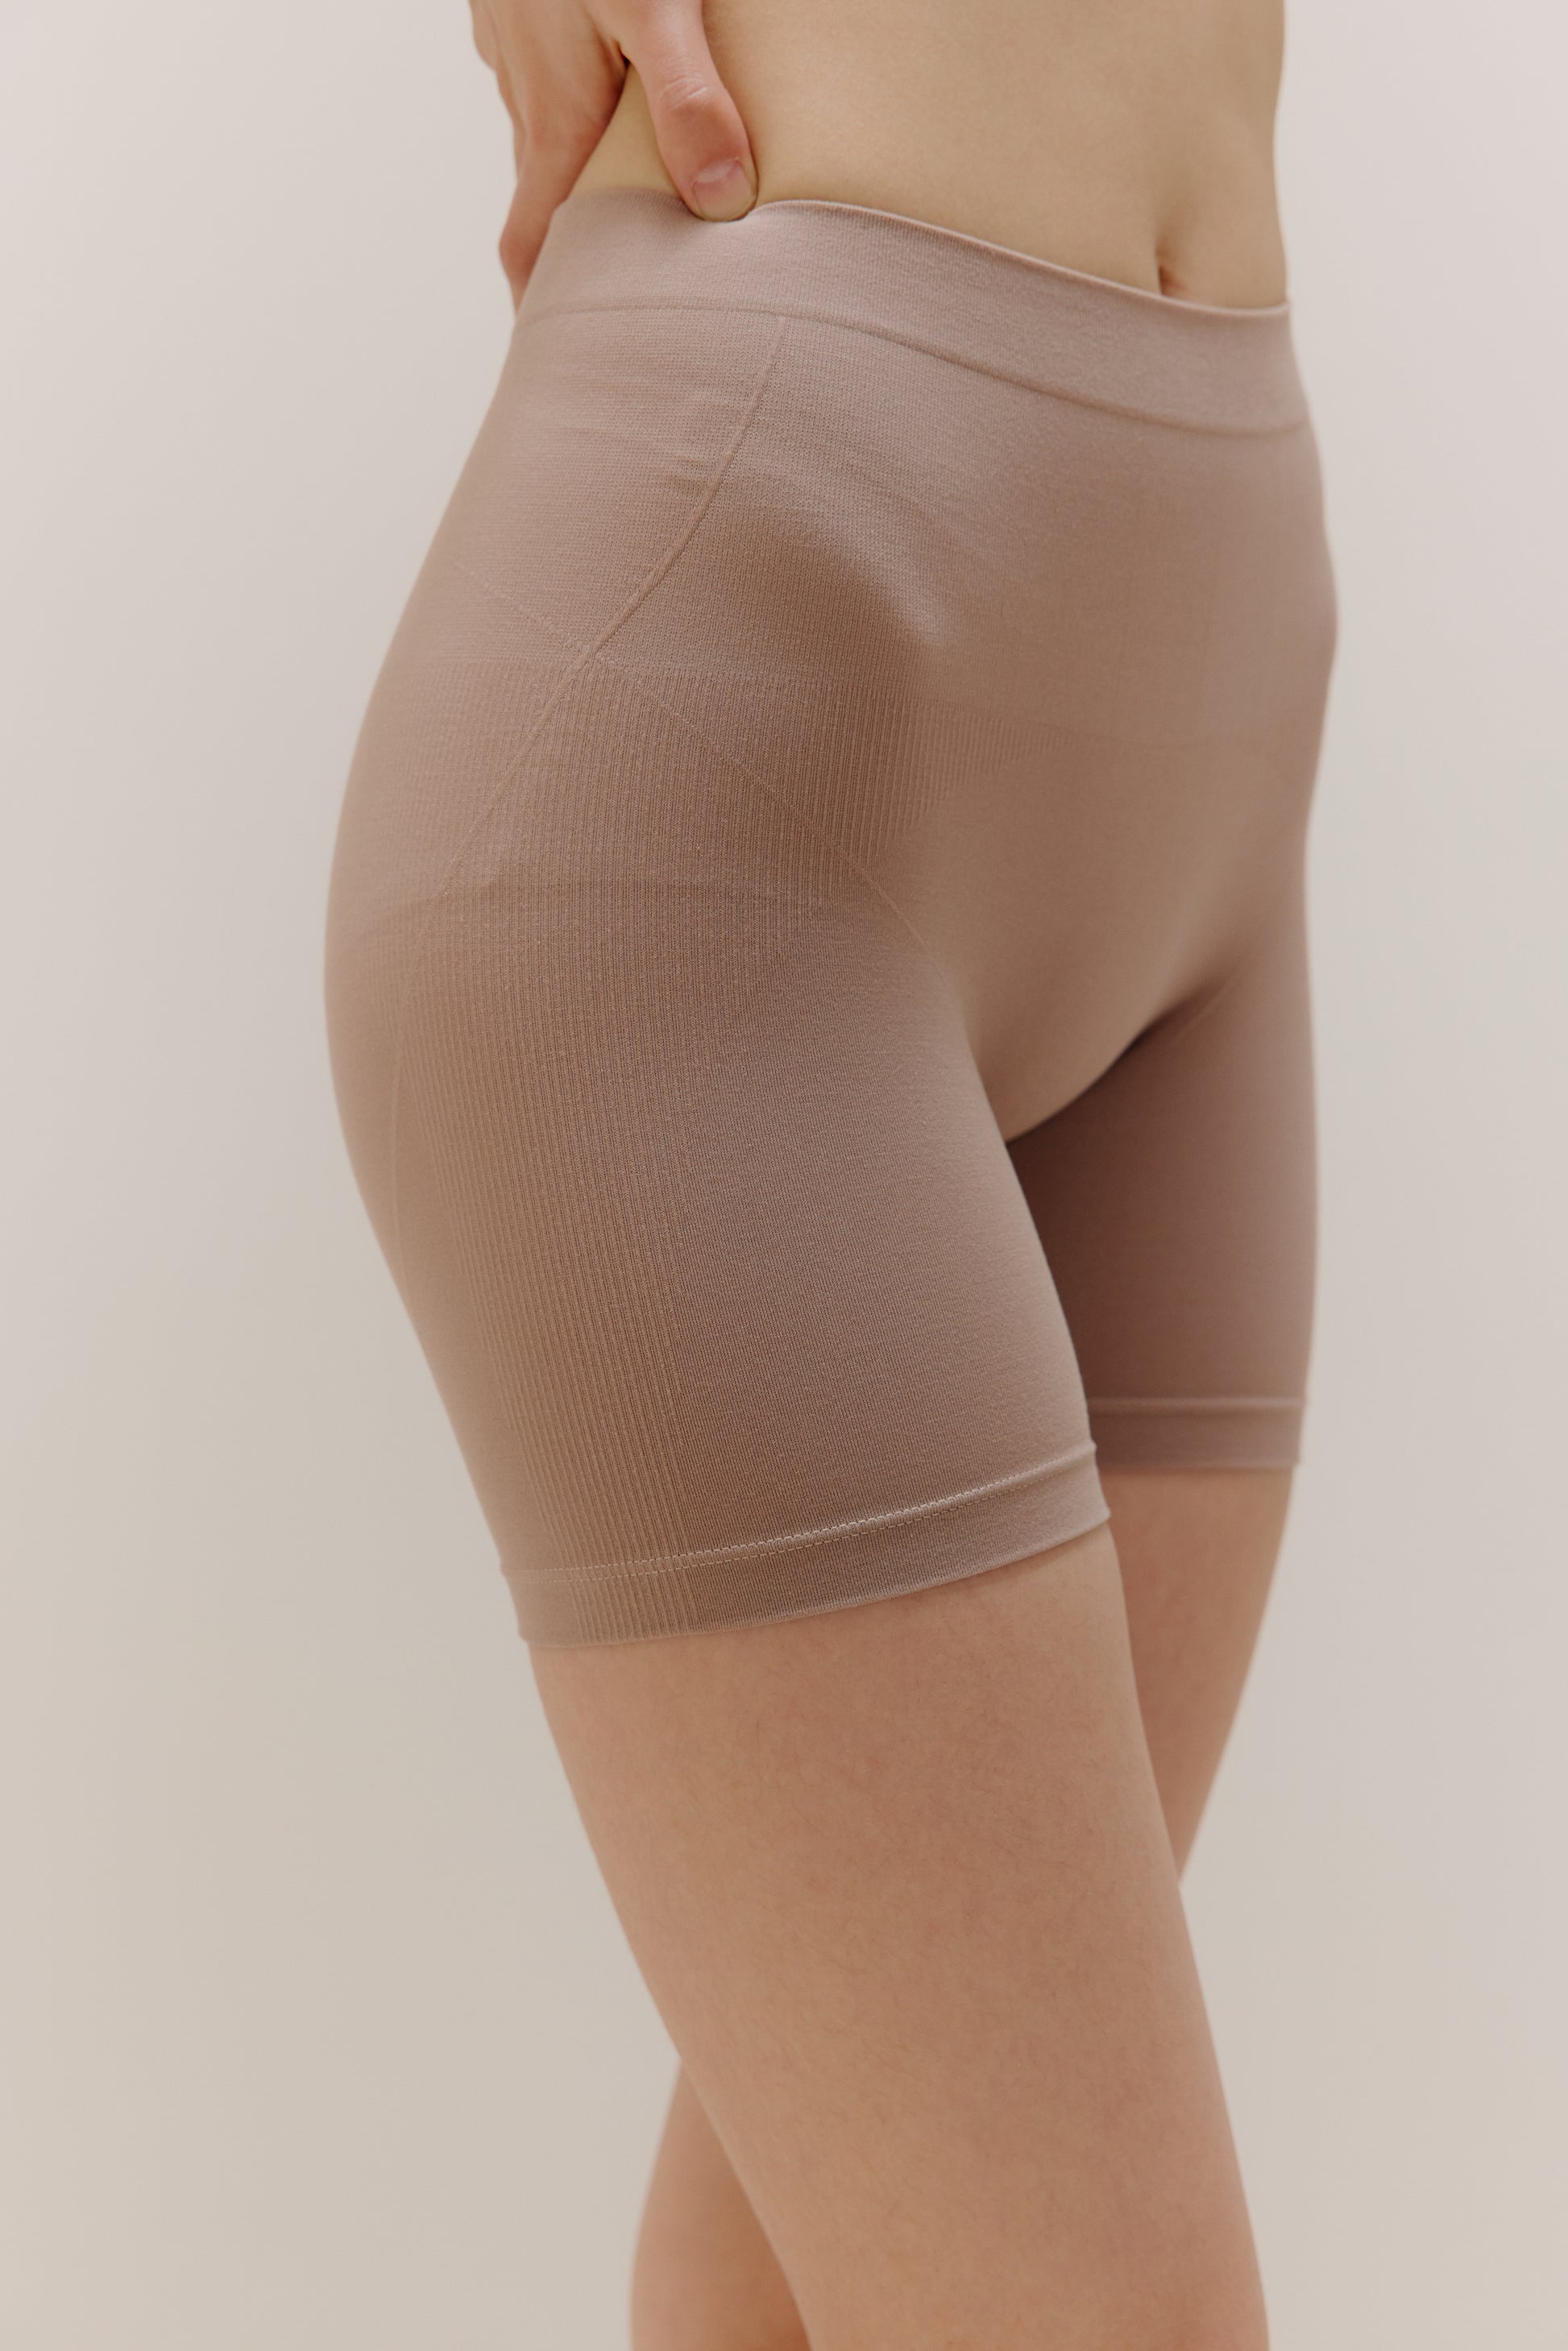 Vero Moda seamless smoothing shorts in beige